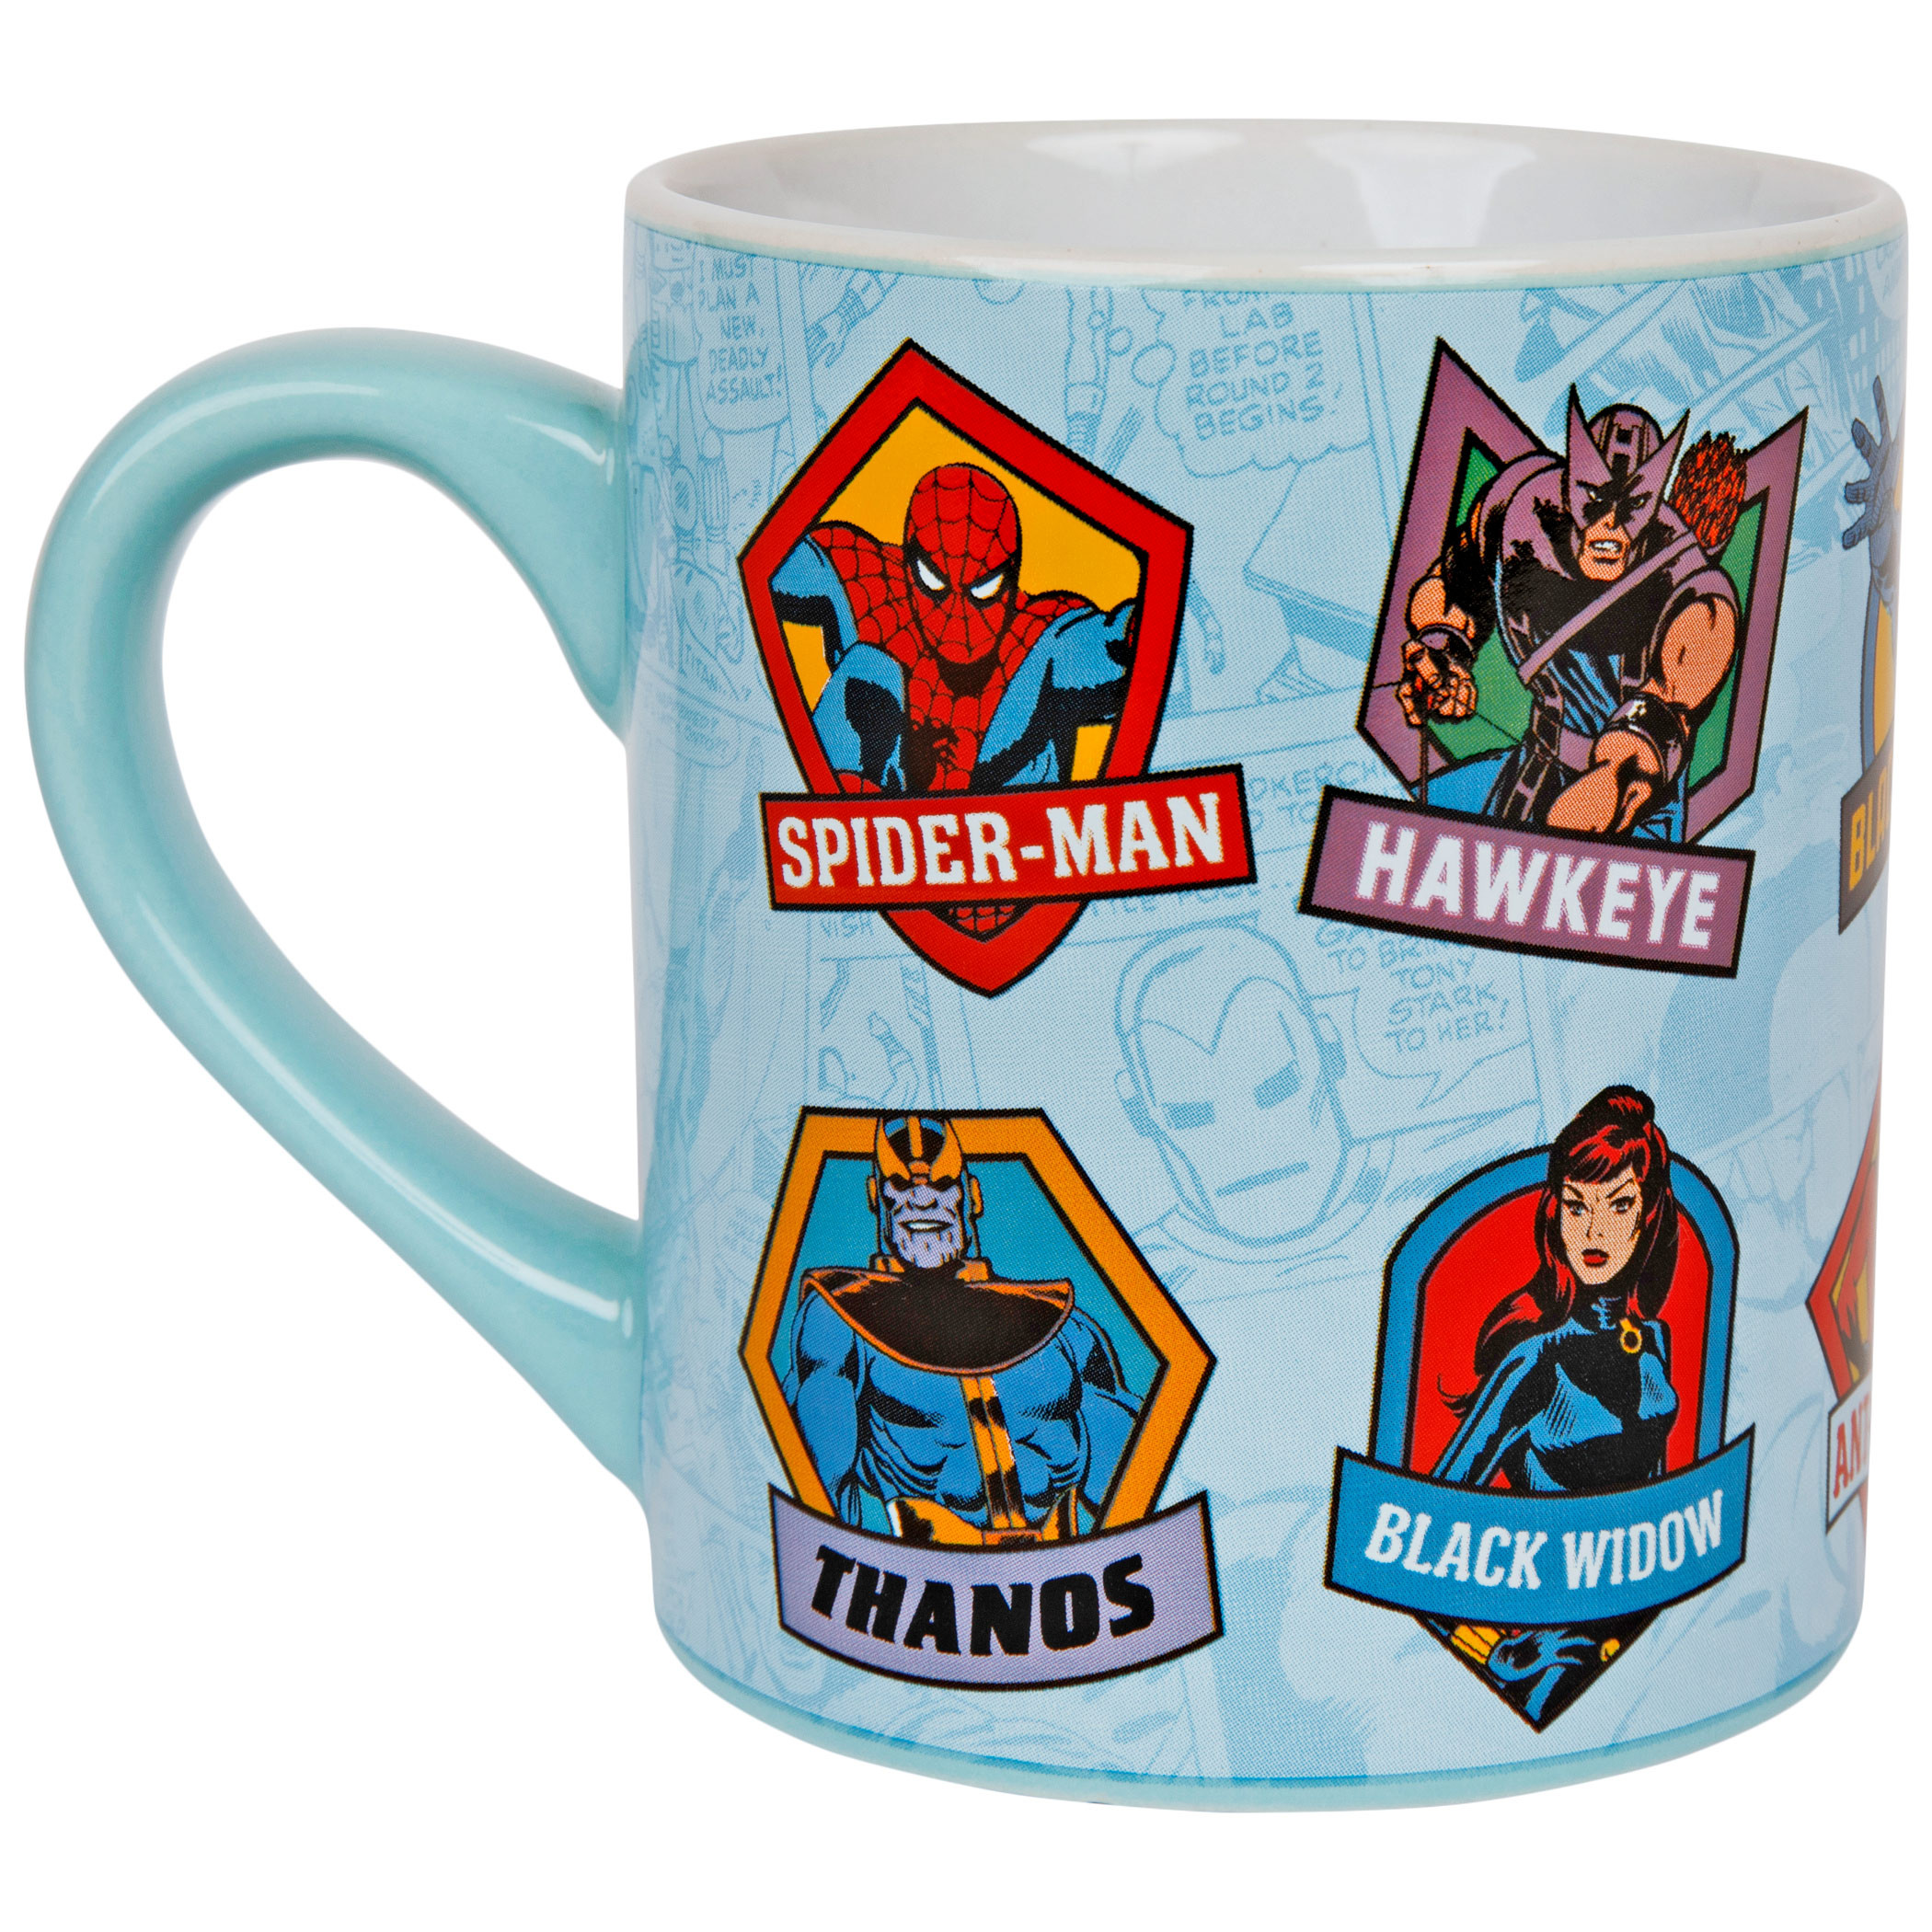 Marvel Many Characters Coffee Mug